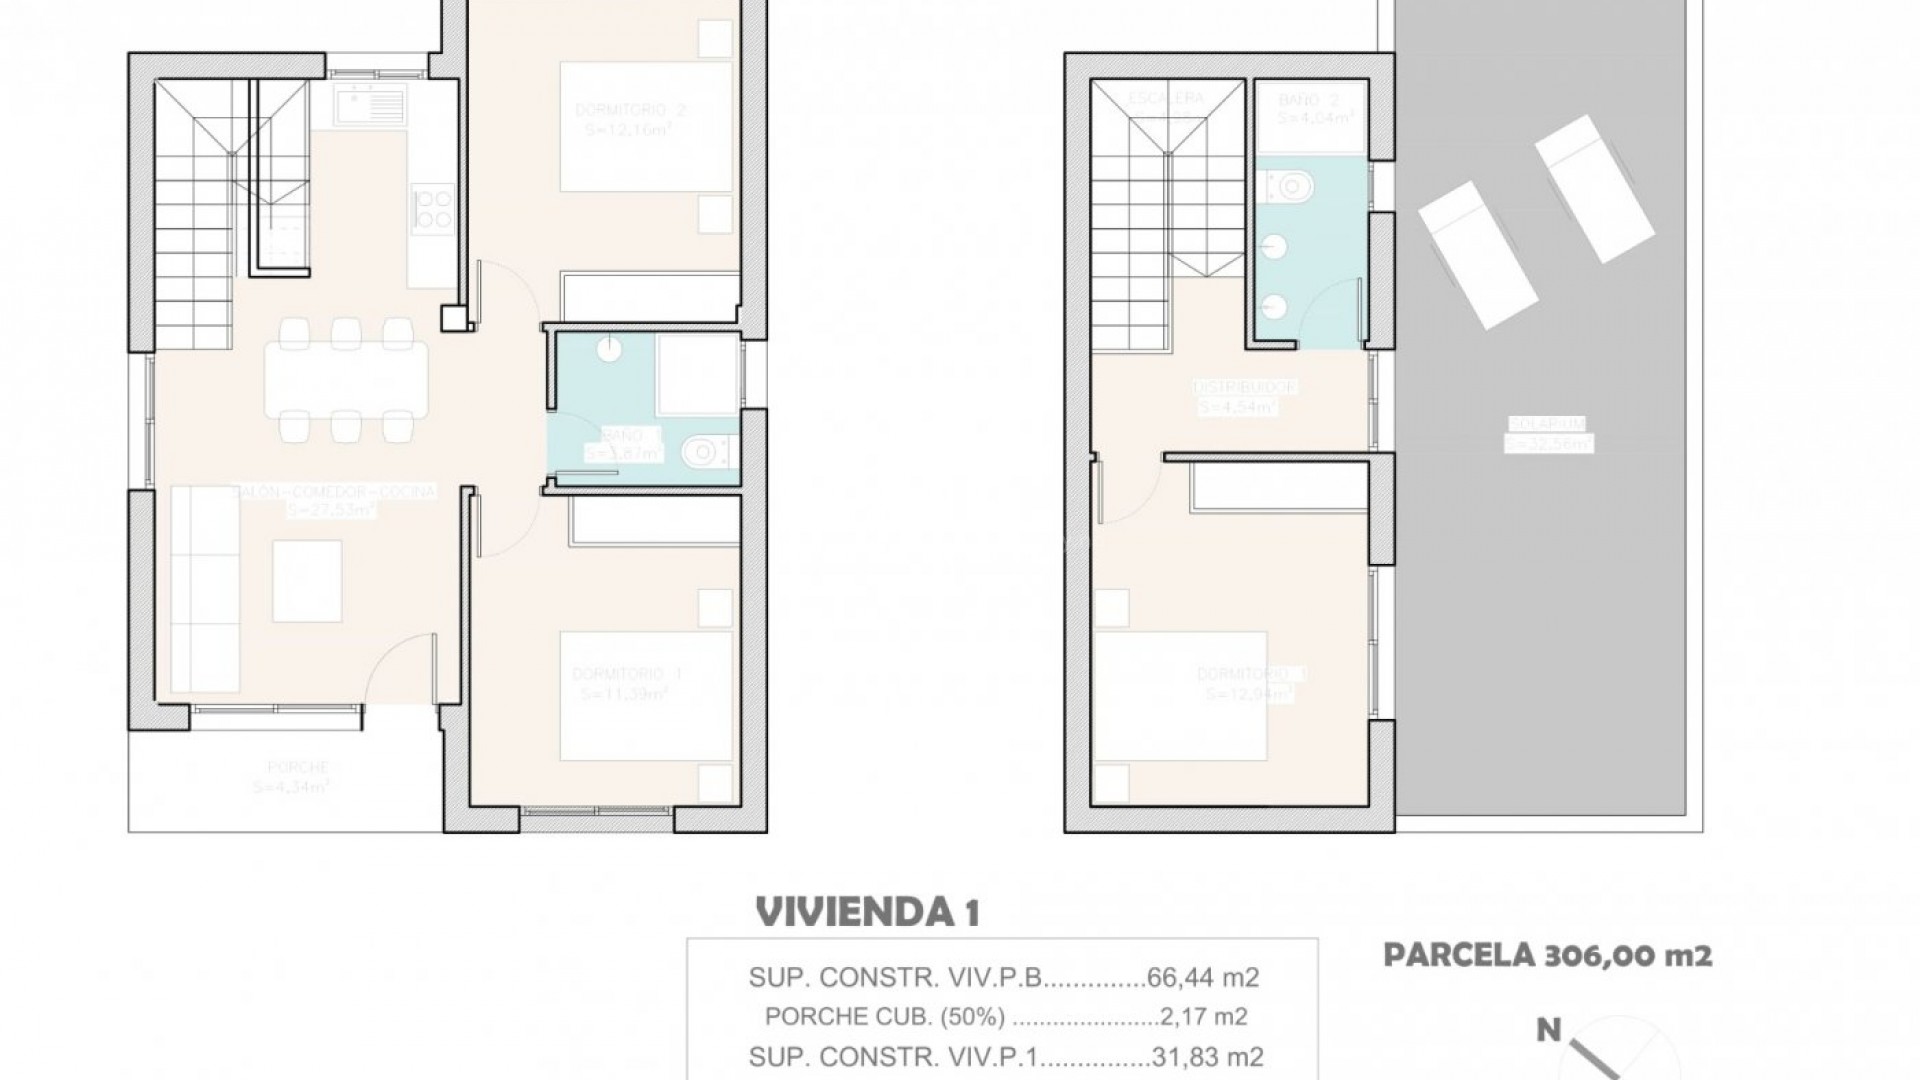 Villaer og rekkehus i Rojales, Ciudad Quesada,3 soverom, 2 bad, åpen kjøkkenløsning med stue og stor terrasse, plass til basseng, parkering